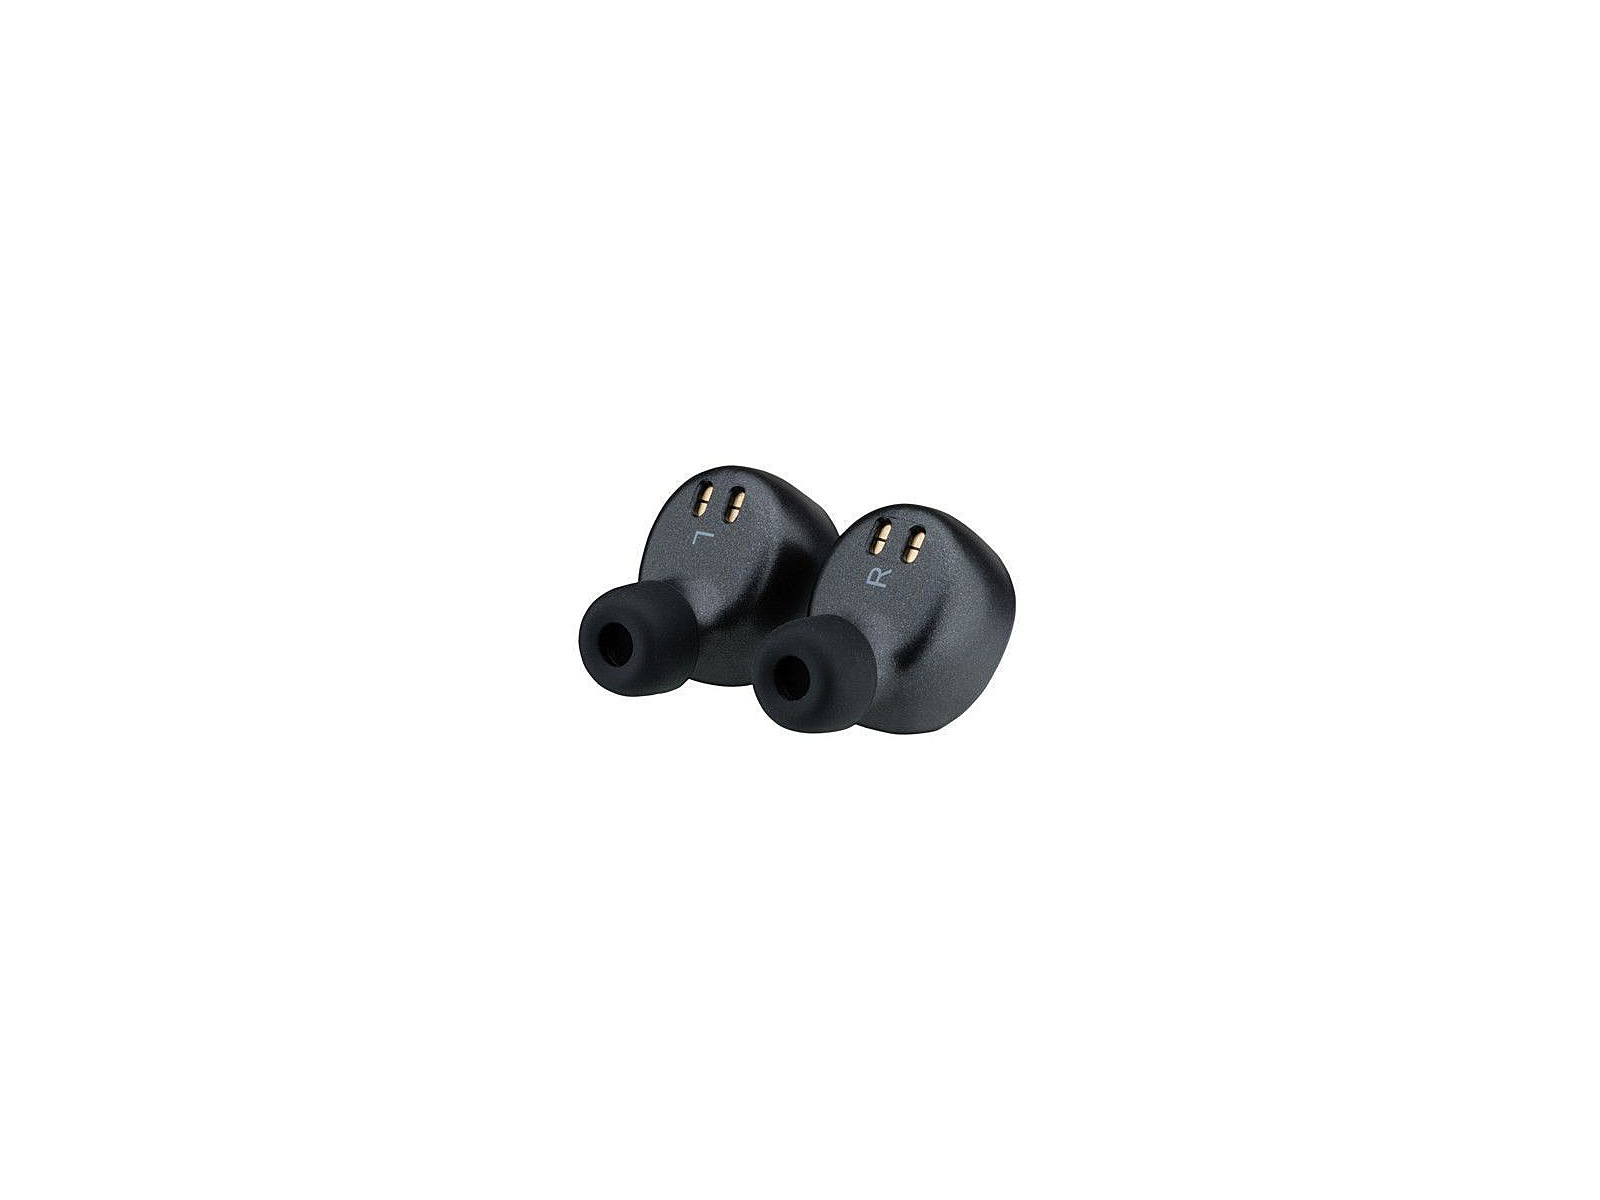 3sixt wireless earbuds